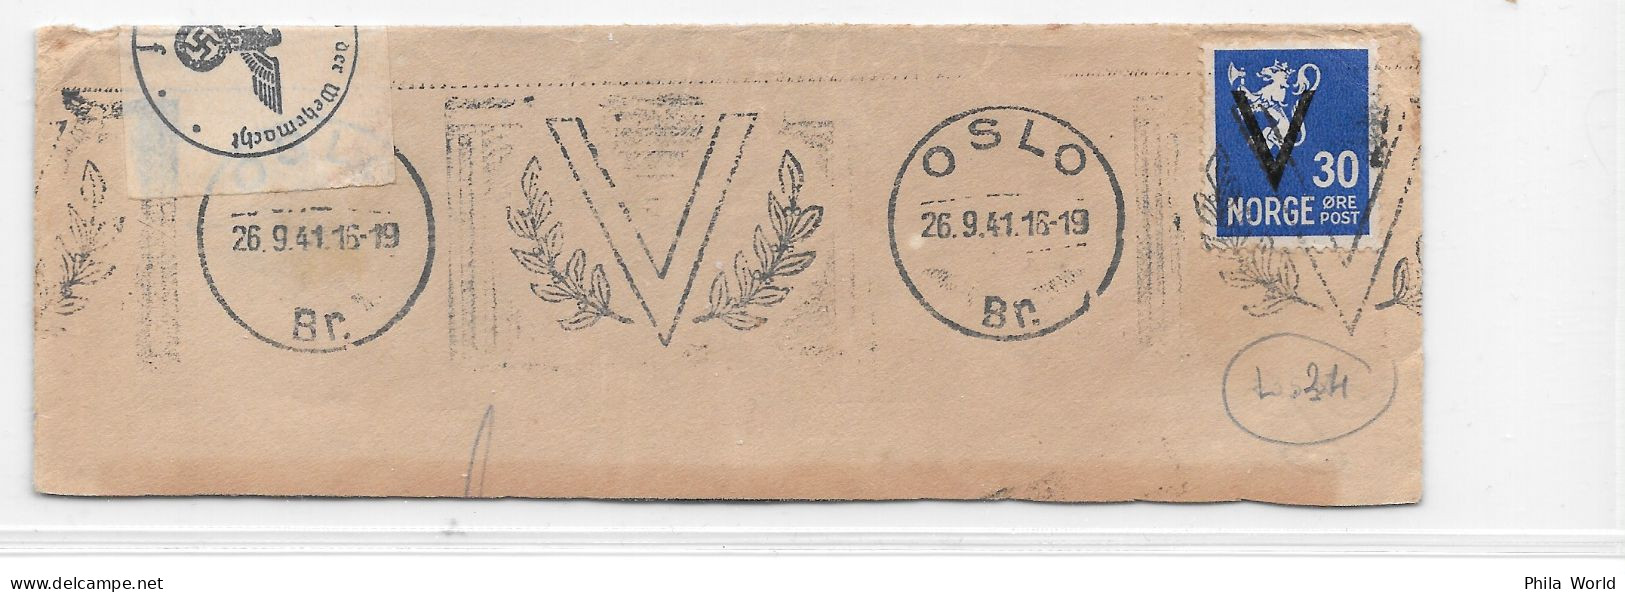 WW2 NORGE NORVEGE NORWAY 1941 Fragment Devant Lettre Oslo V Overprint Surcharge 30 C LION + Cancel Germany Censorship - Covers & Documents